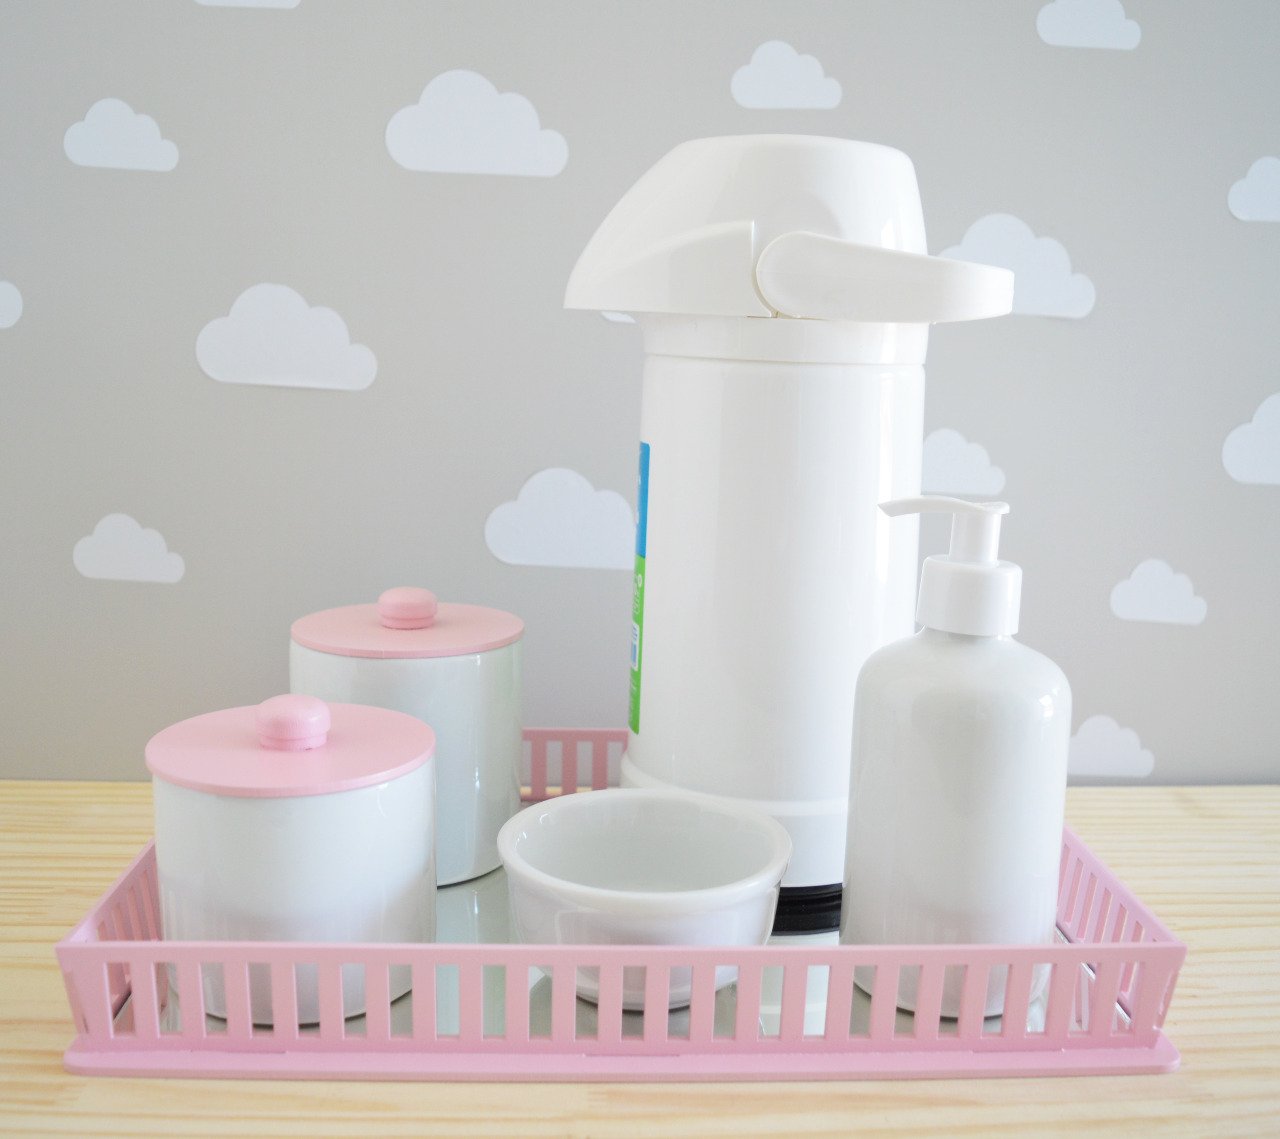 Kit Higiene Porcelana Bebê Maternidade Montessoriano + Bandeja + Térmica  500ml - Verde Safari